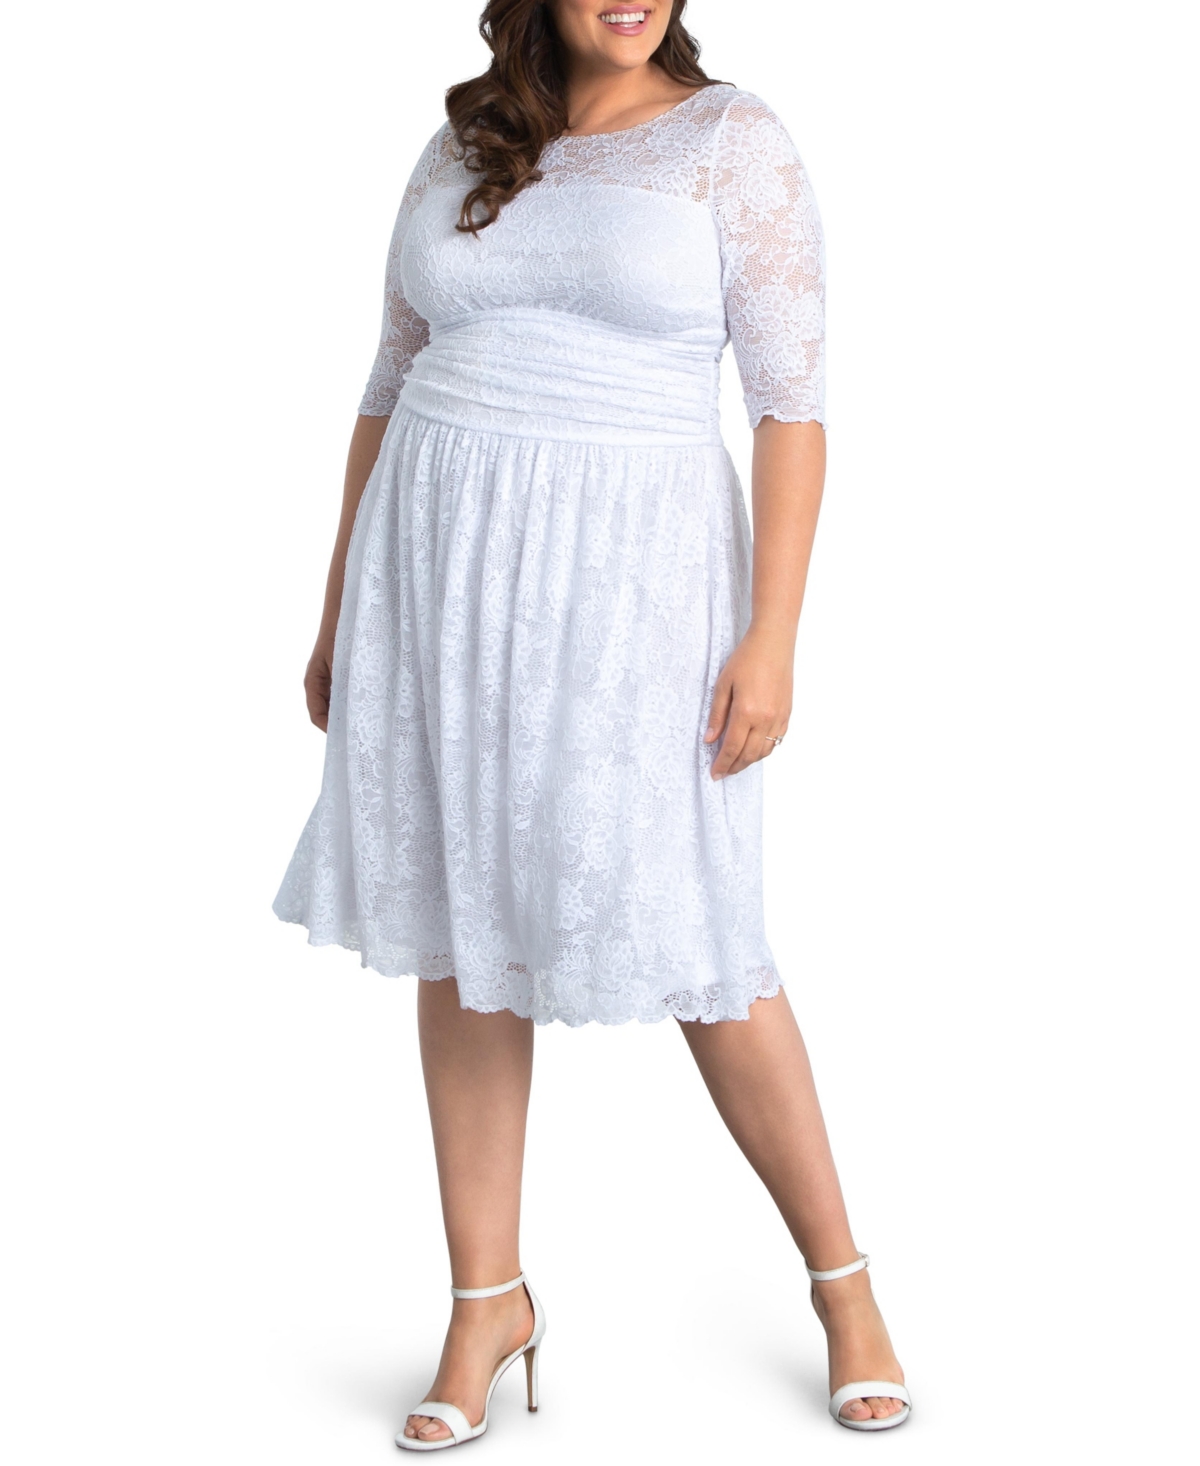 Women's Plus Size Aurora Lace Dress - White